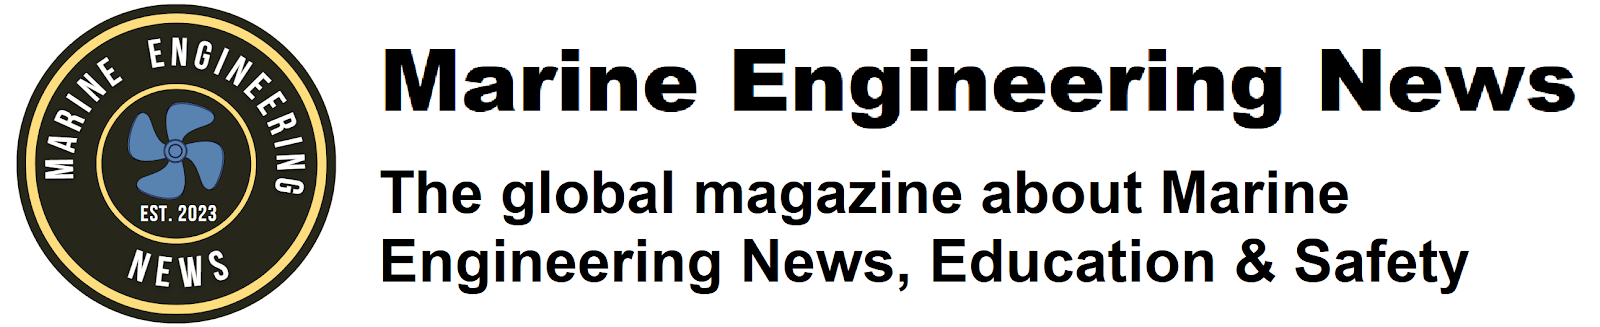 Marine Engineering News